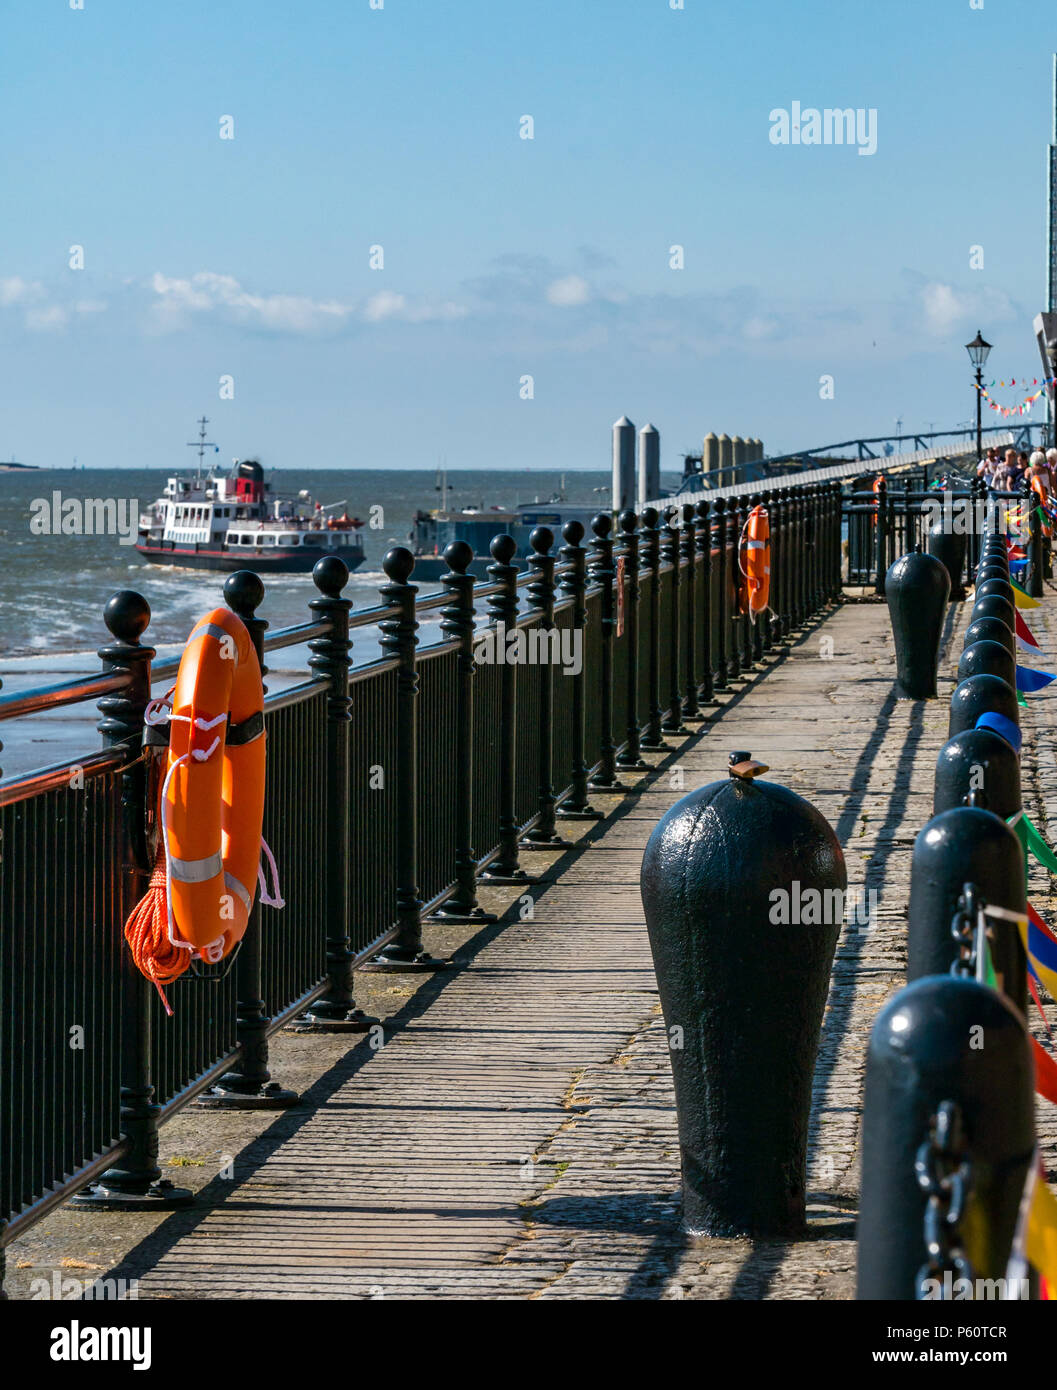 Albert Dock riverside pedestrian walkway next to the River Mersey with Mersey ferry departing, Liverpool, England, UK Stock Photo